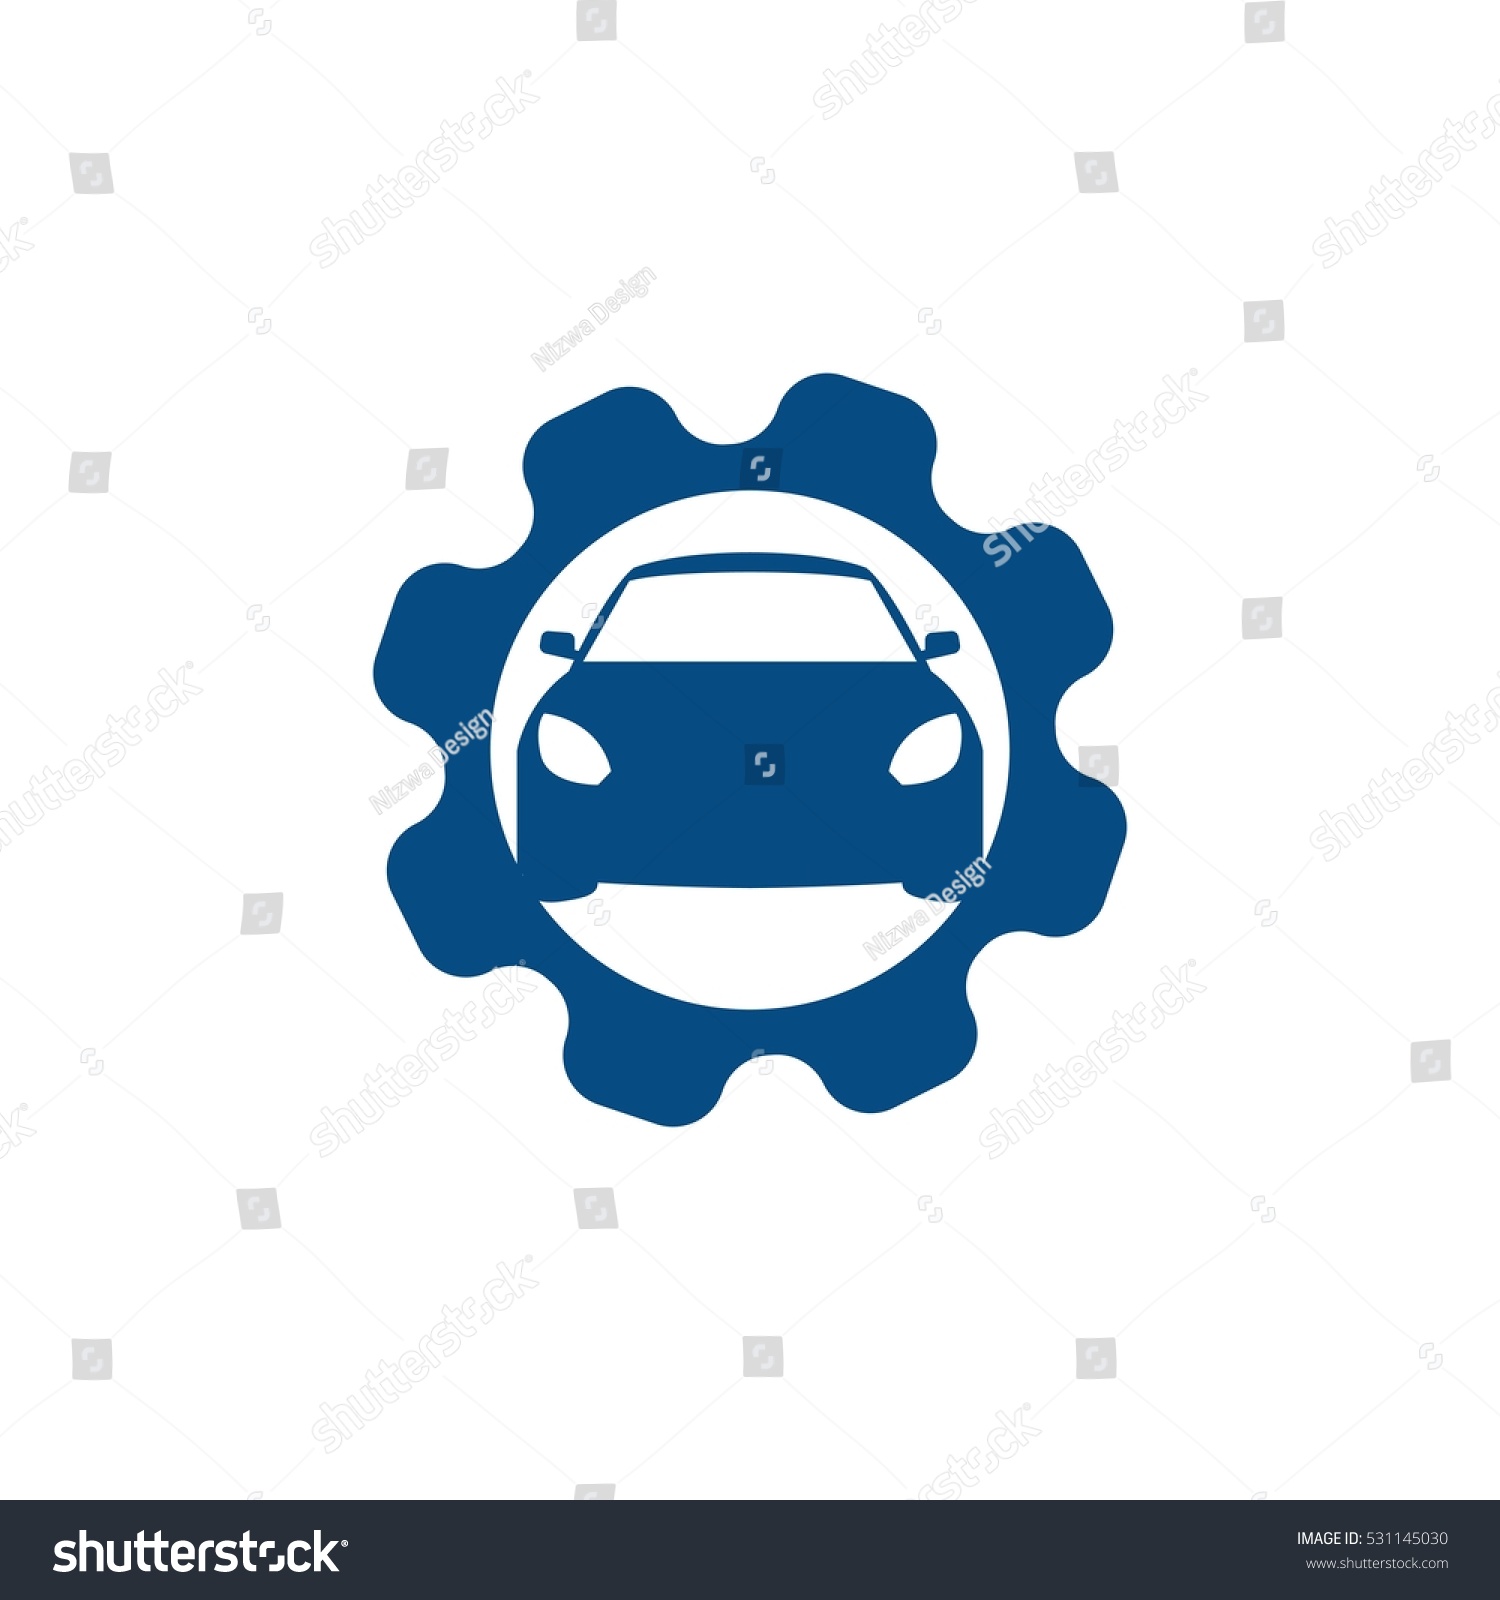 Automotive Gear Car Vector Logo Design Element - 531145030 : Shutterstock